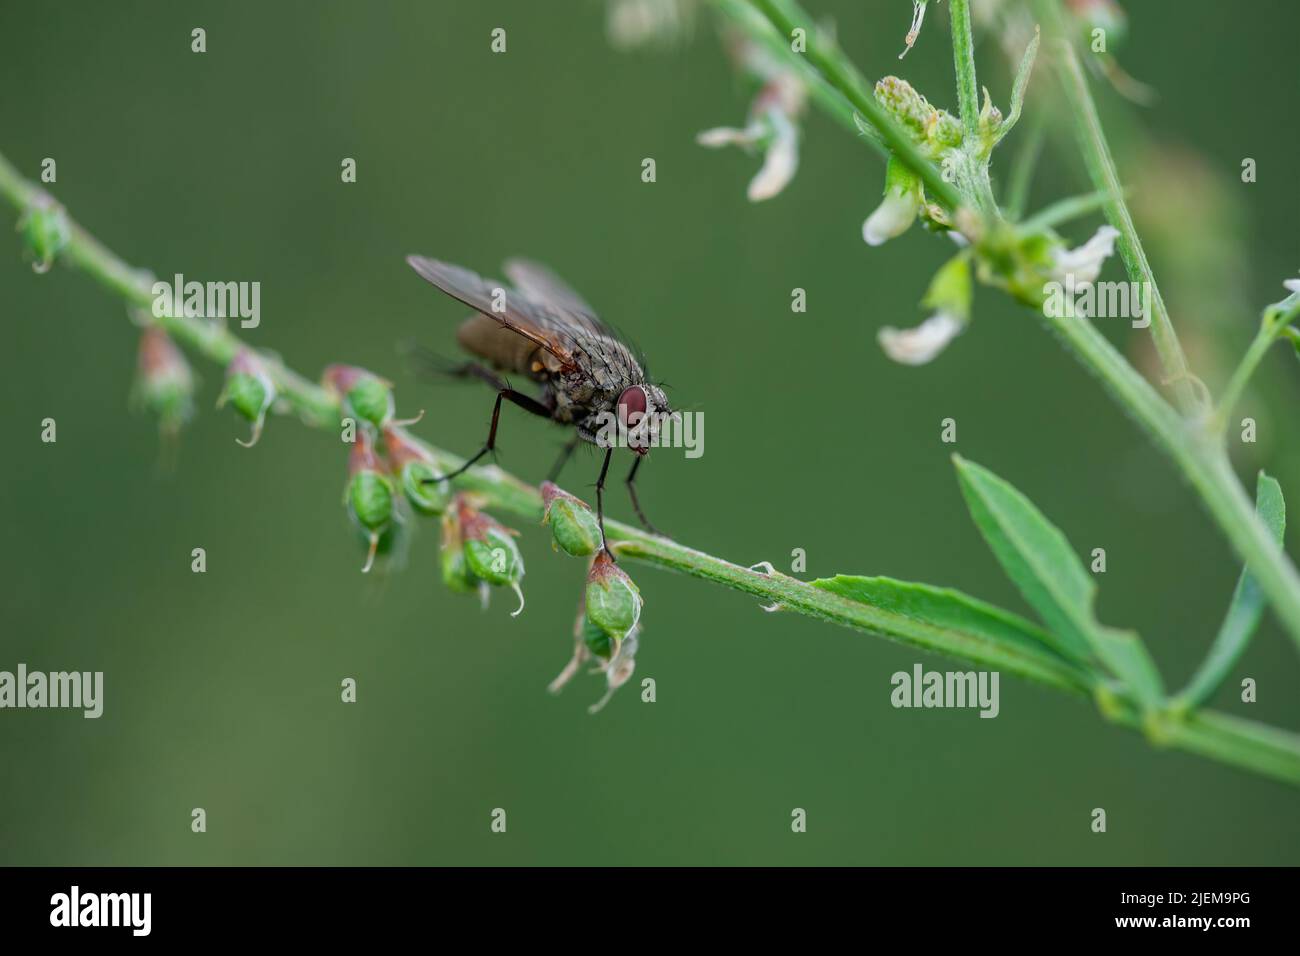 Drosophila Fly Diptera Parasite Insect Macro Stock Photo